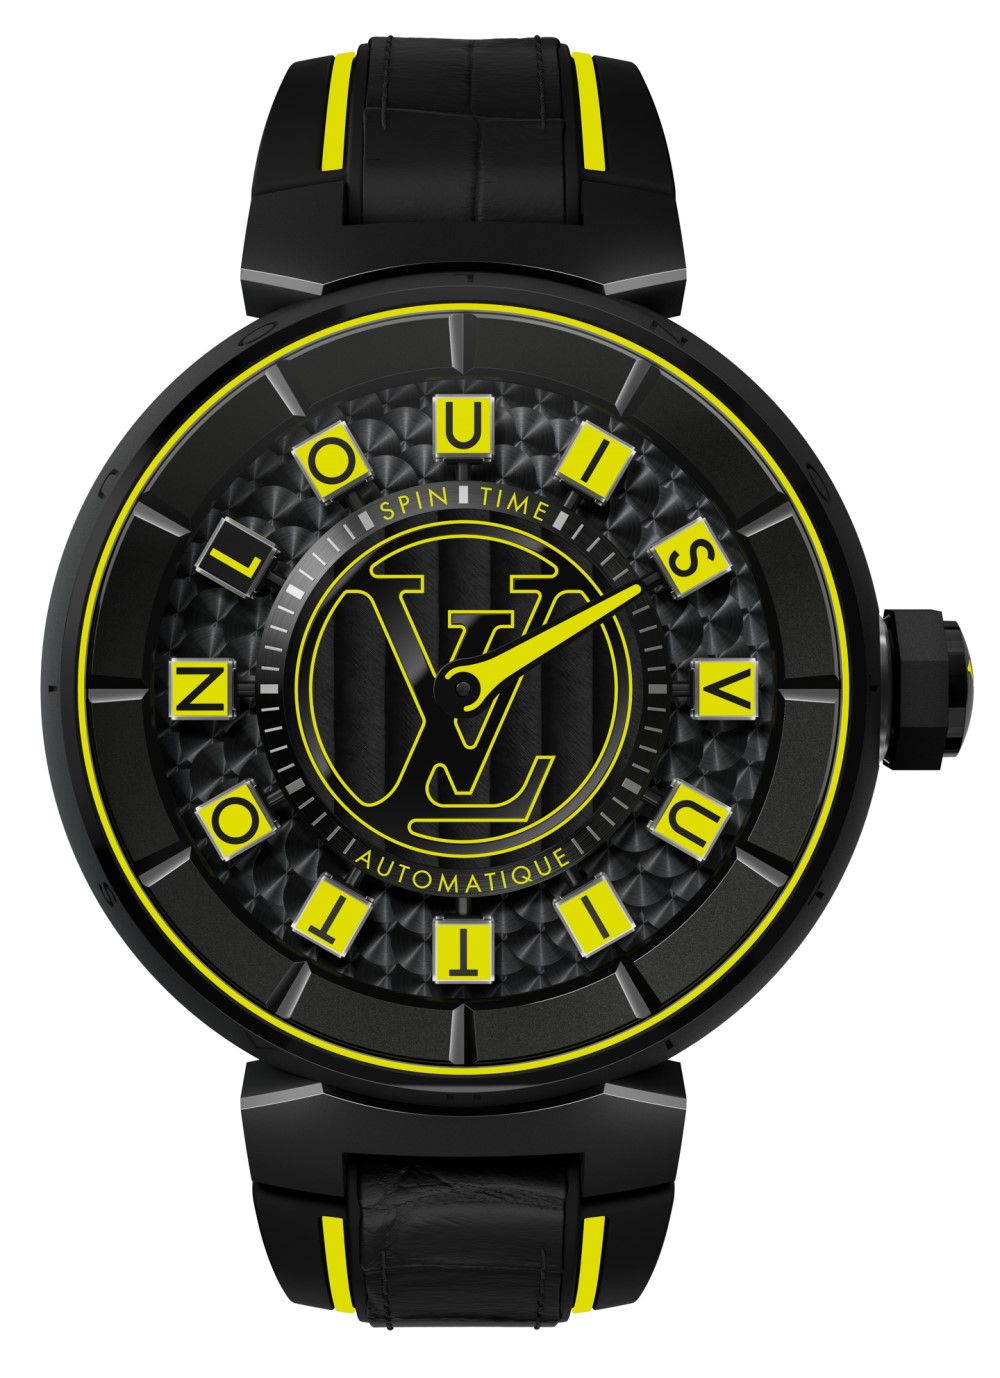 Louis Vuitton Tambour is Singularly Distinctive in sports luxury watches